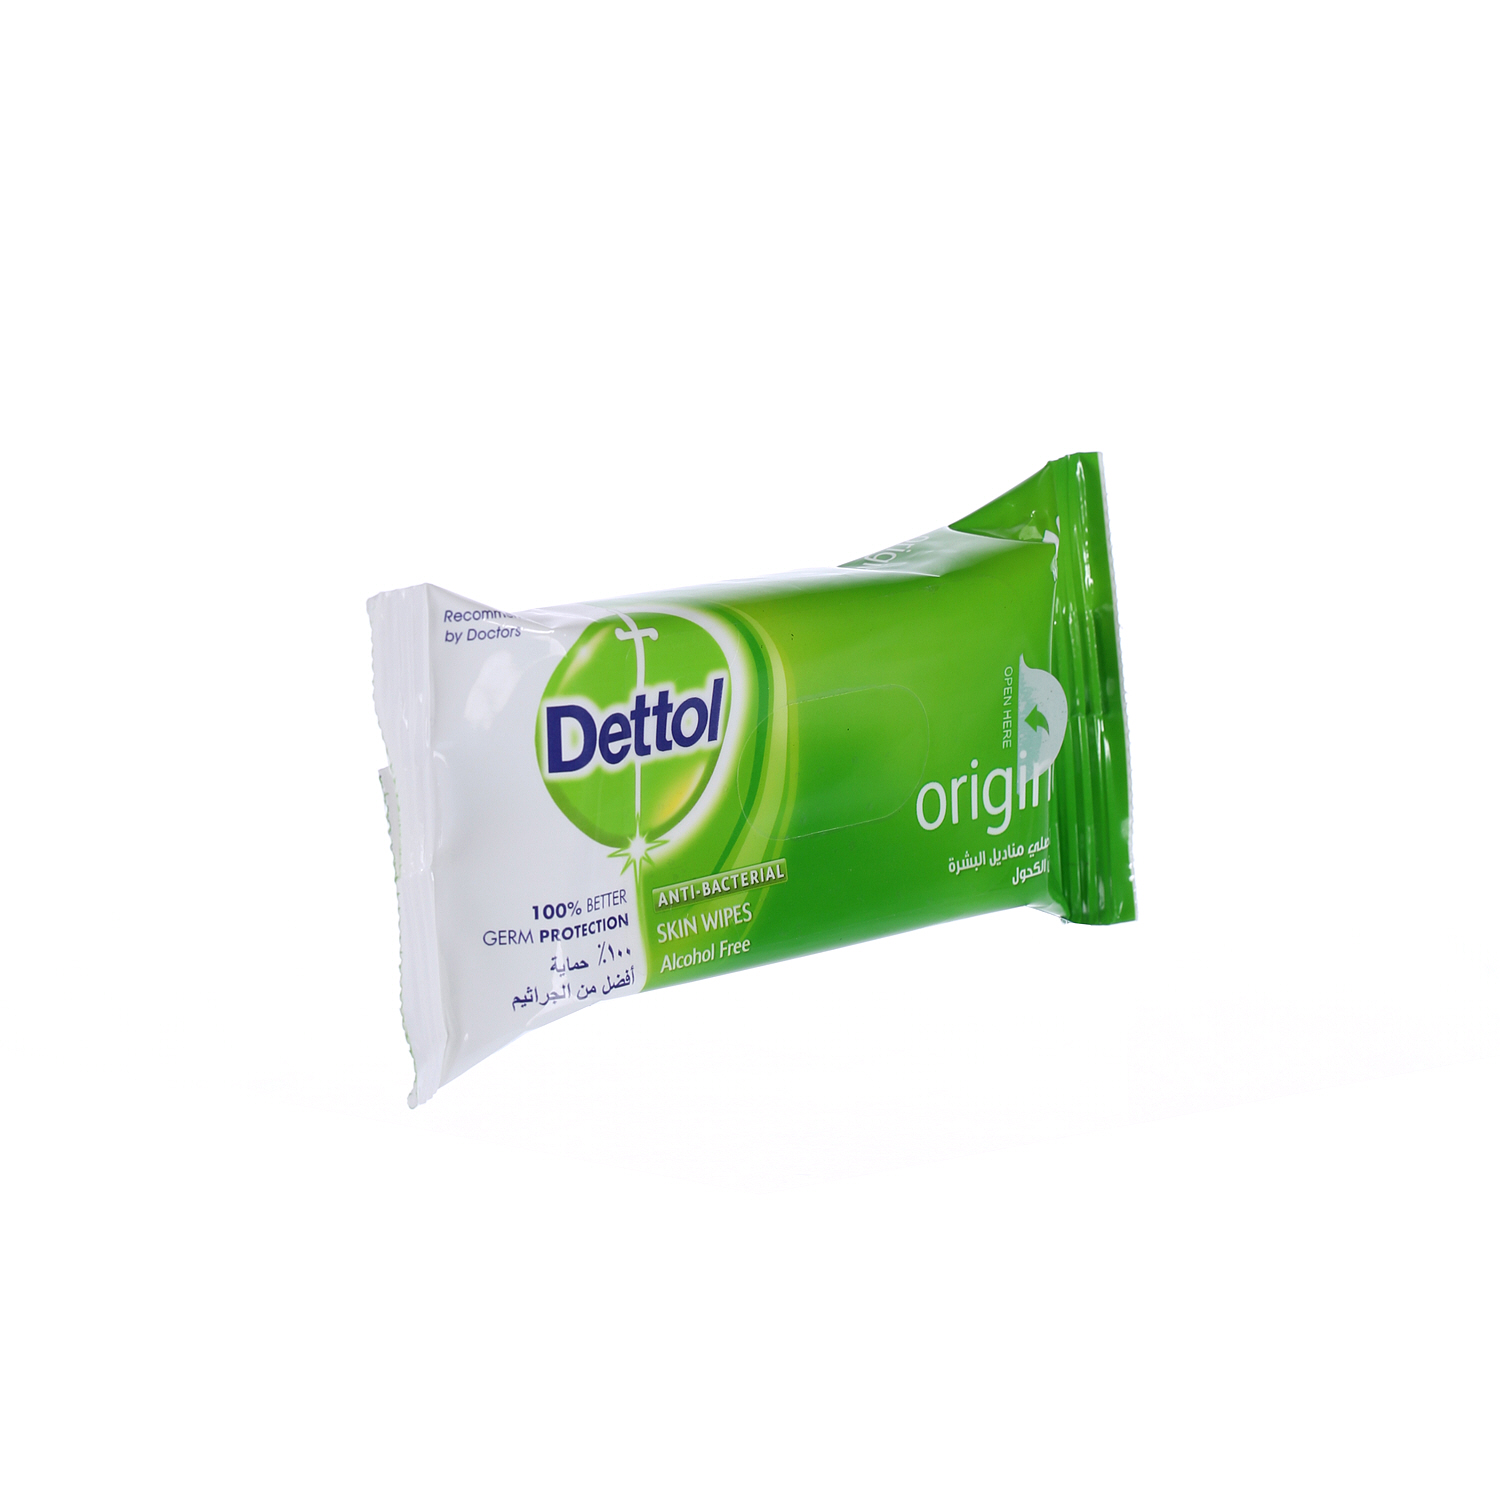 Dettol Anti-Bacterial Original Wipes 10 Wipes